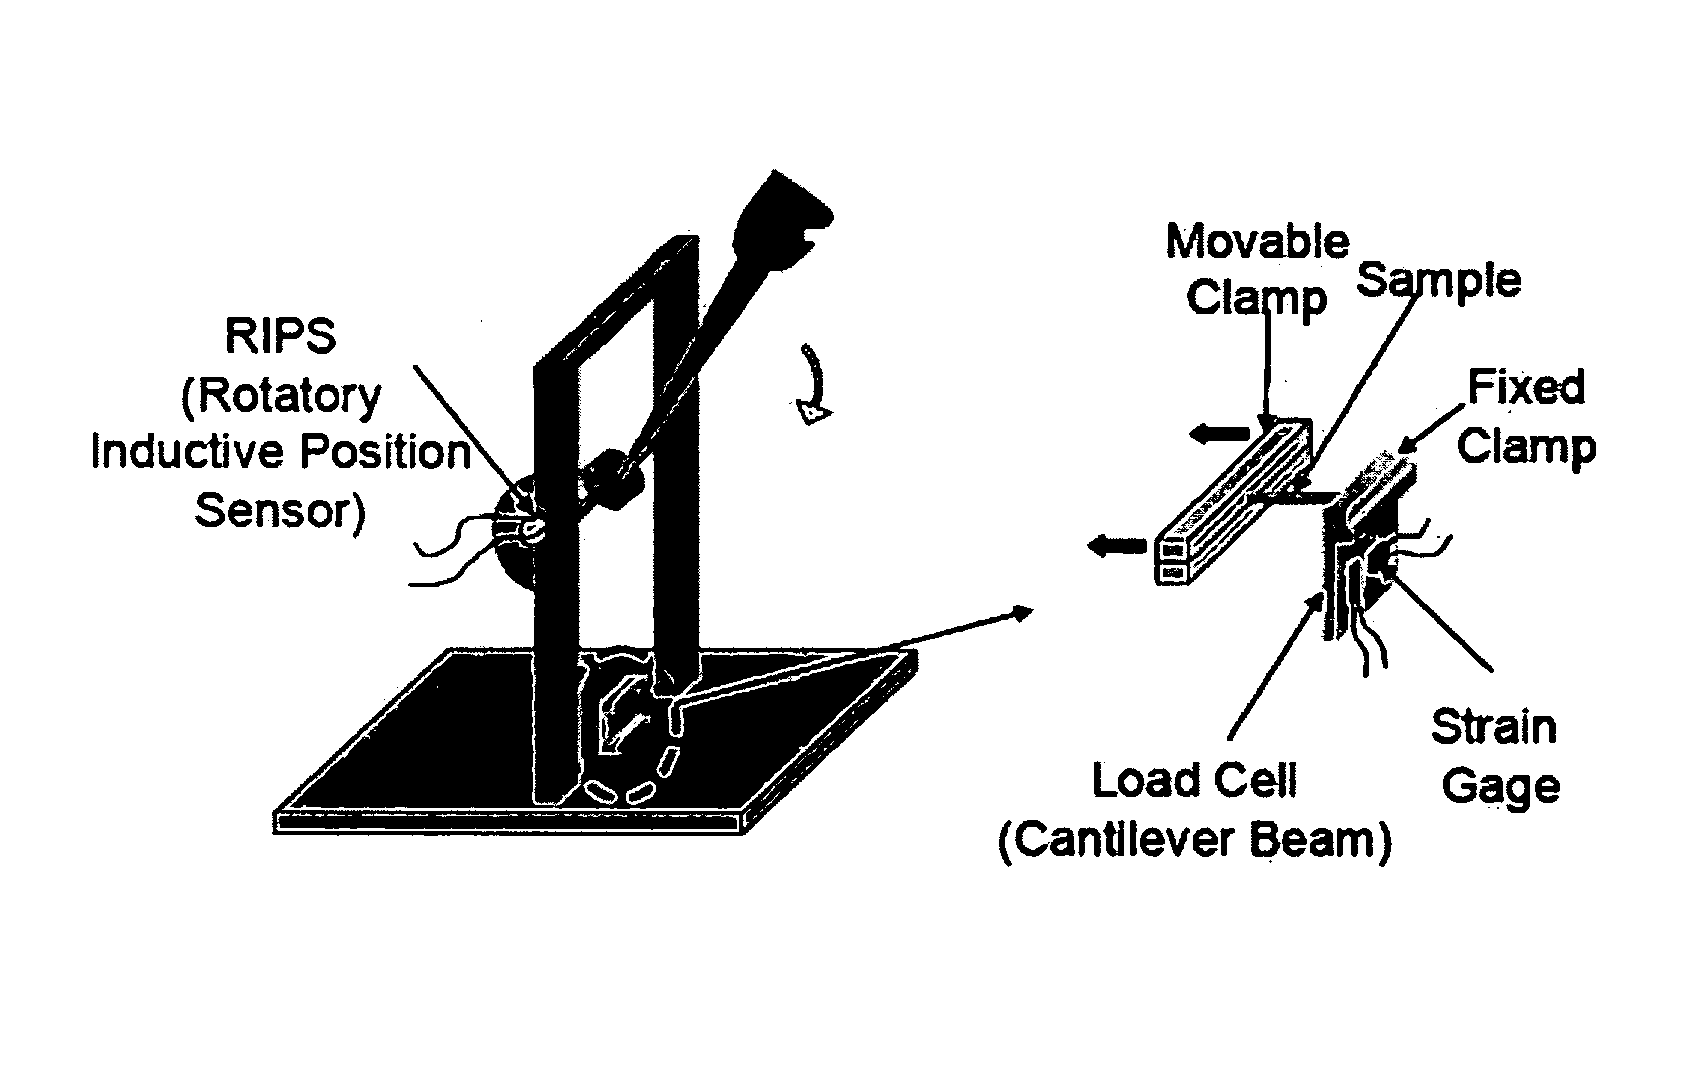 Process for improving tear resistance in elastic films